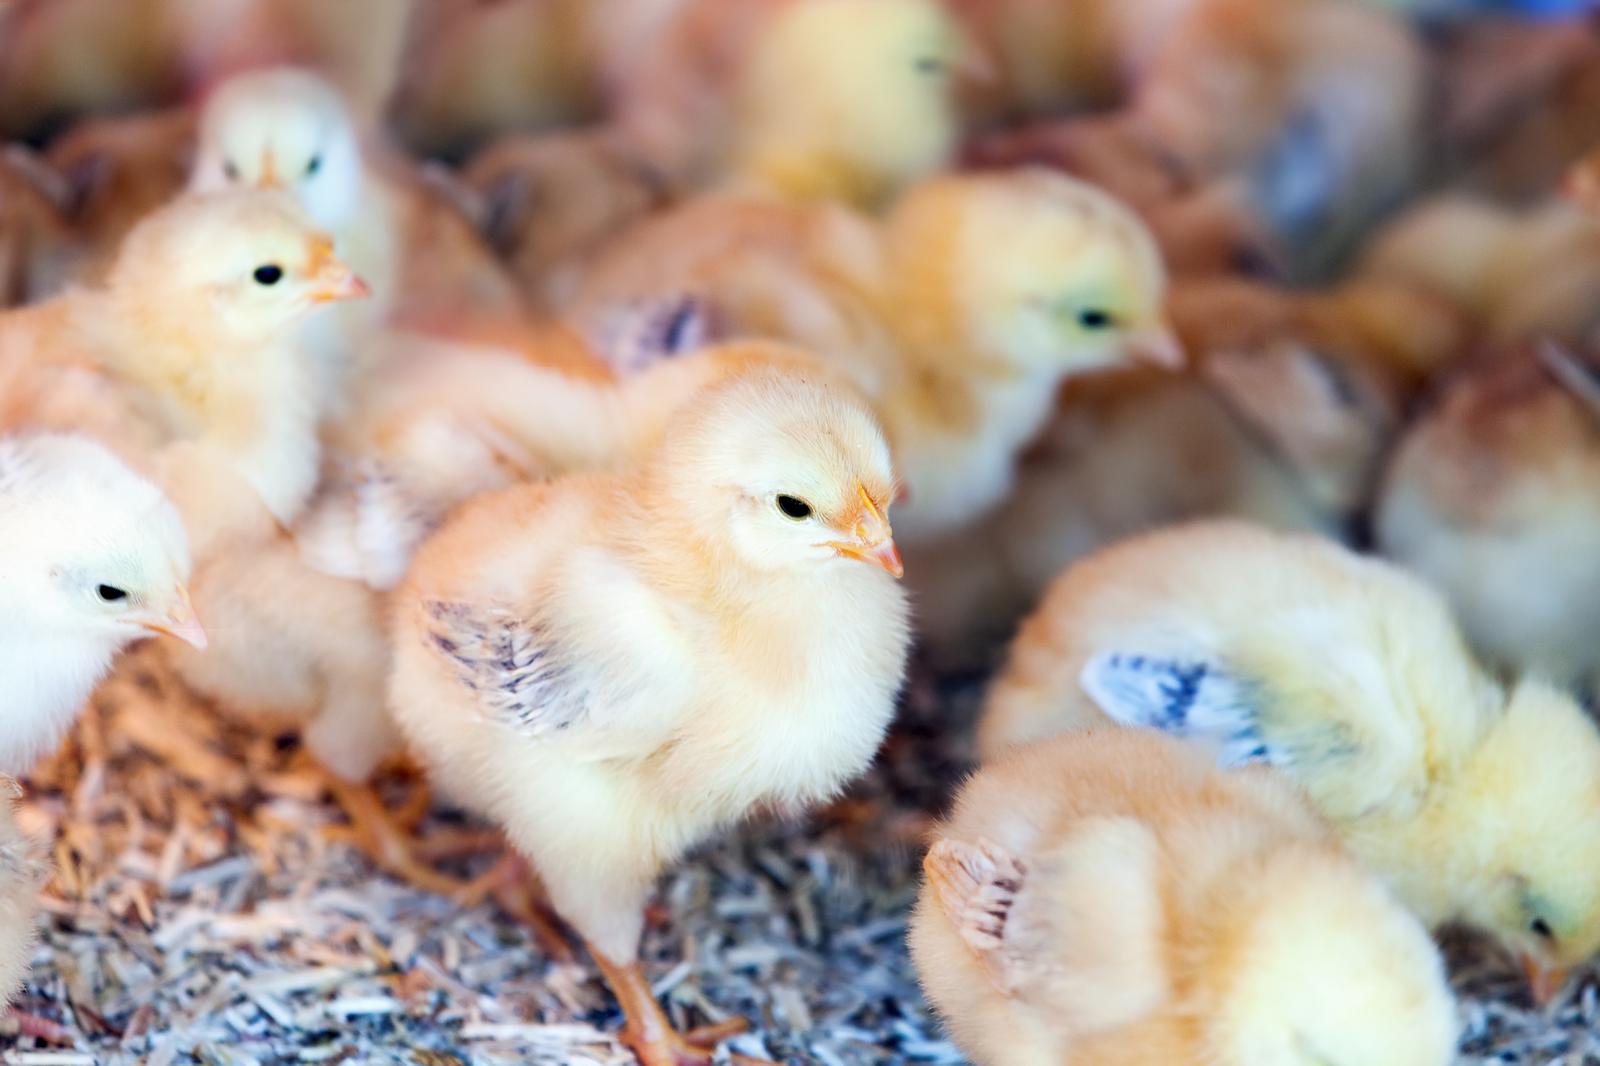 Raising of poultry in Pärnu county